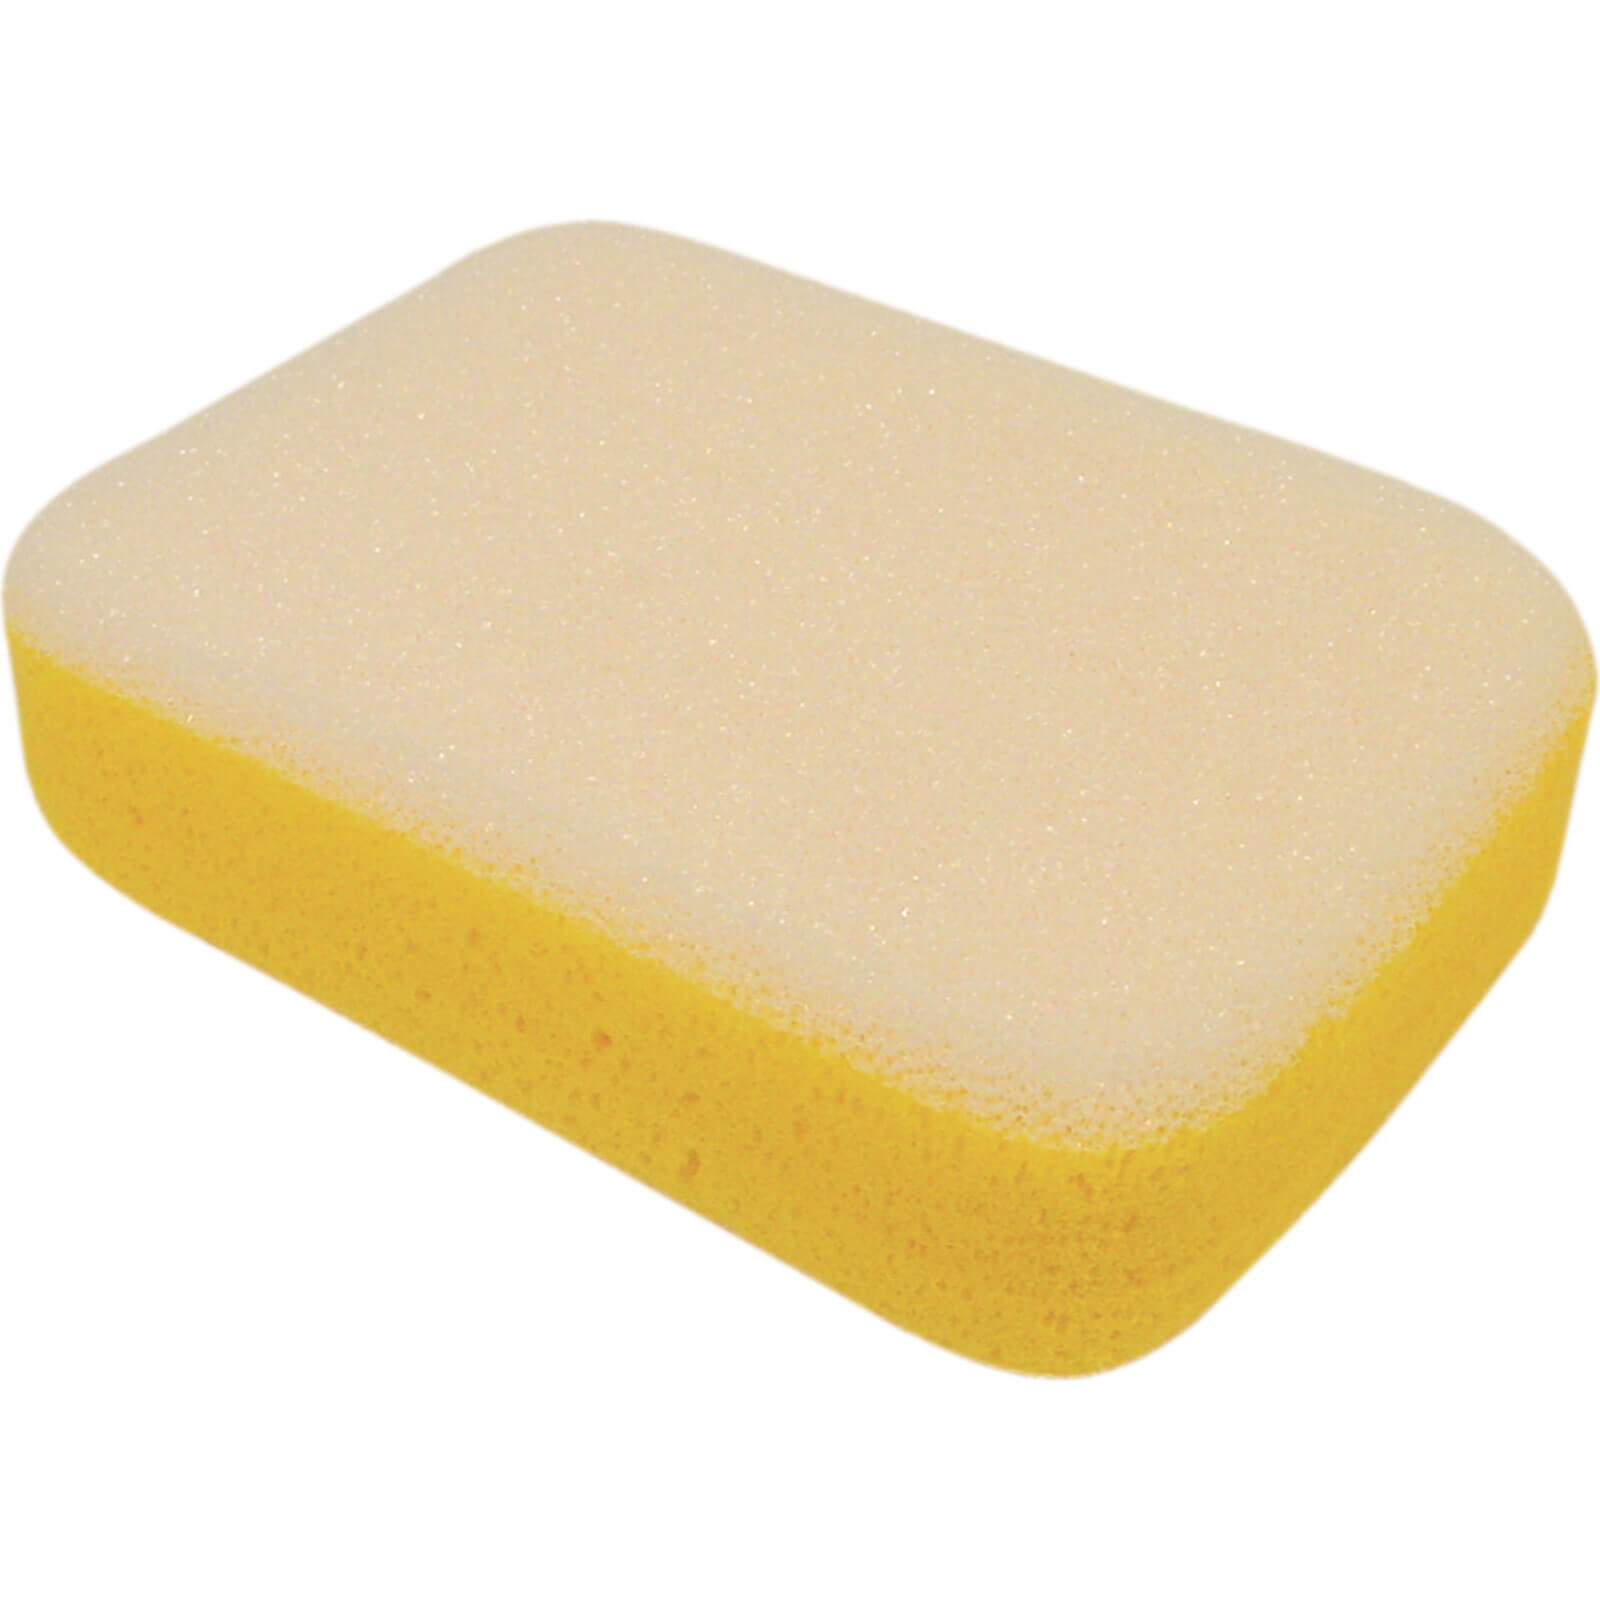 Vitrex 10 2913 Dual Purpose Grouting Sponge